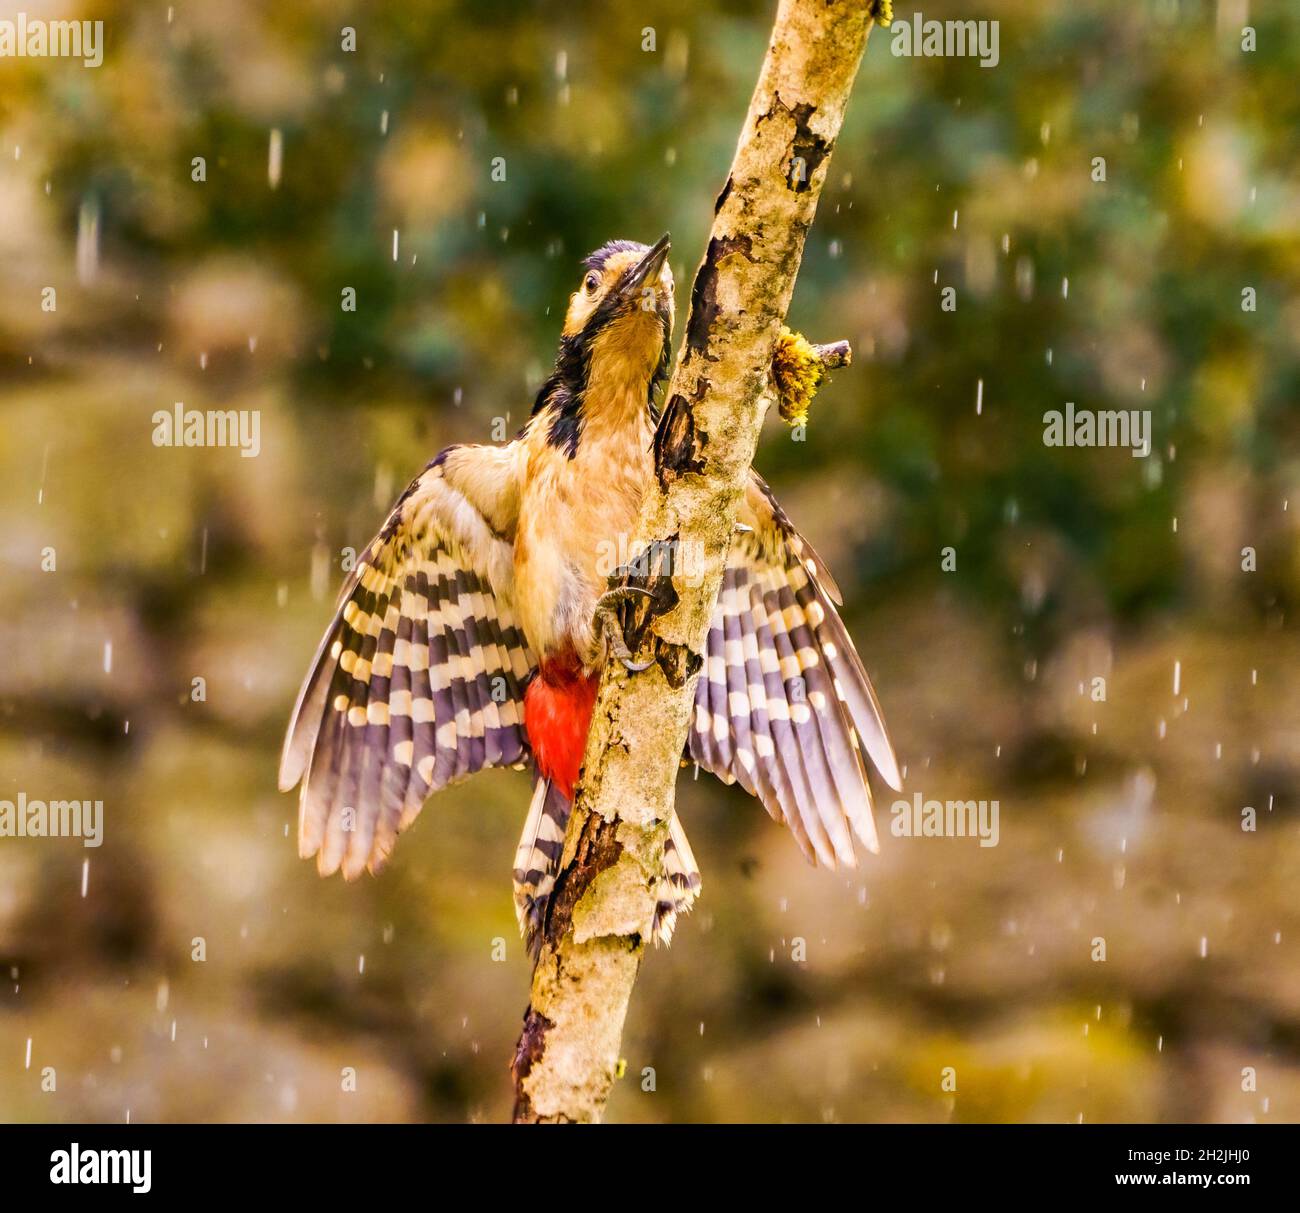 Great Spotted Woodpecker Enjoying The Rain in Cotswolds,UK Garden Stock Photo